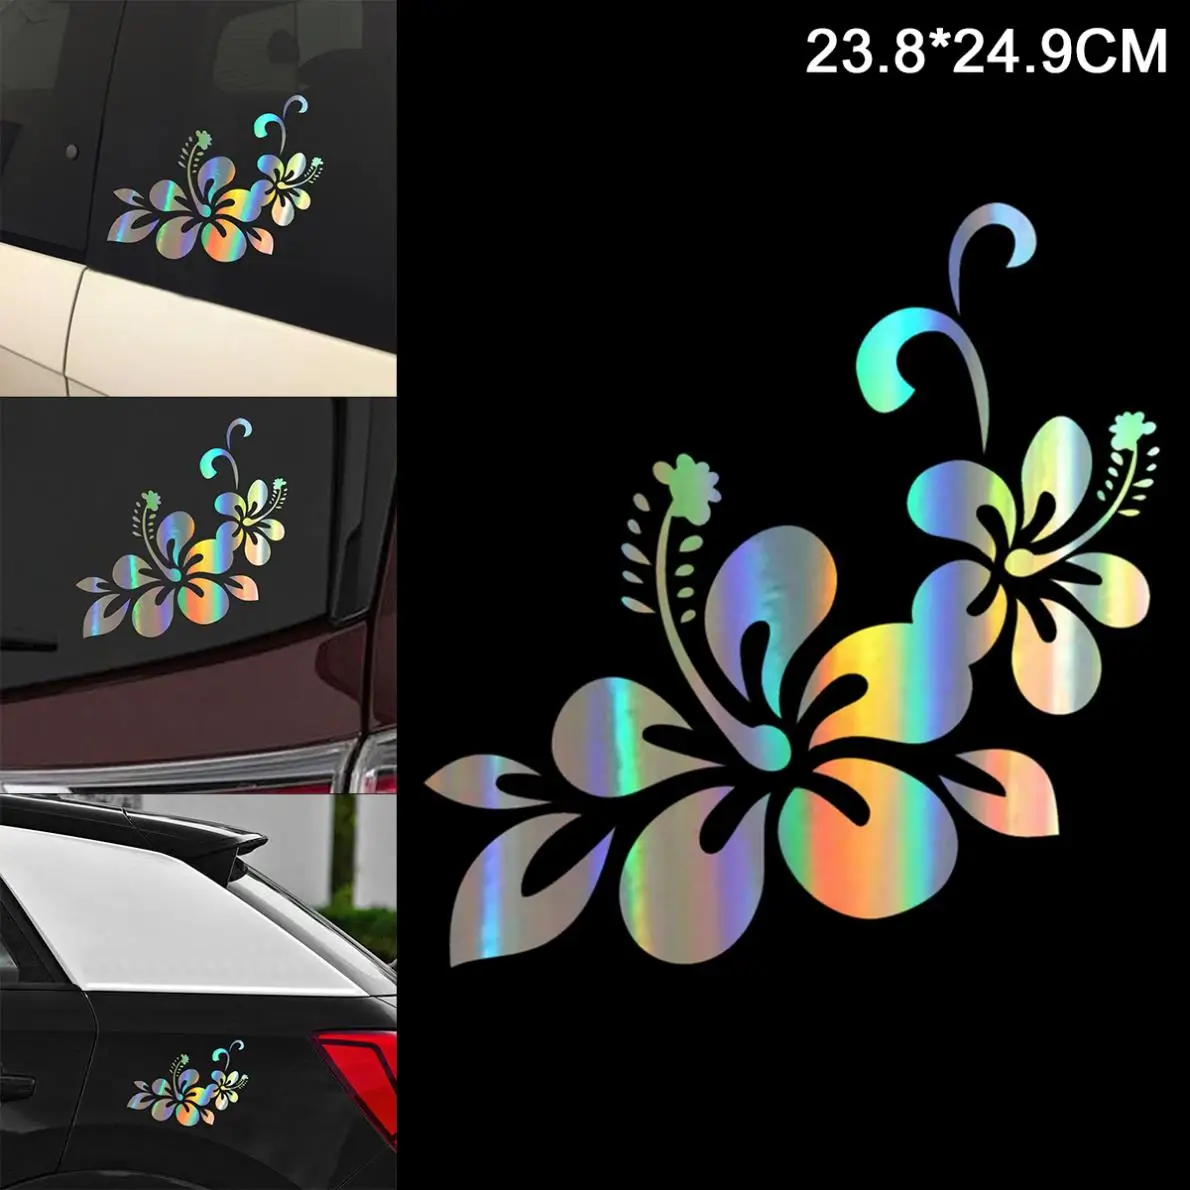 

23.8 x 24.9 CM Laser Vinyl Elegent Flower Car Sticker Outdoor Reflective Car Motorcycle Body Bumper Hood Decals Window Sticker